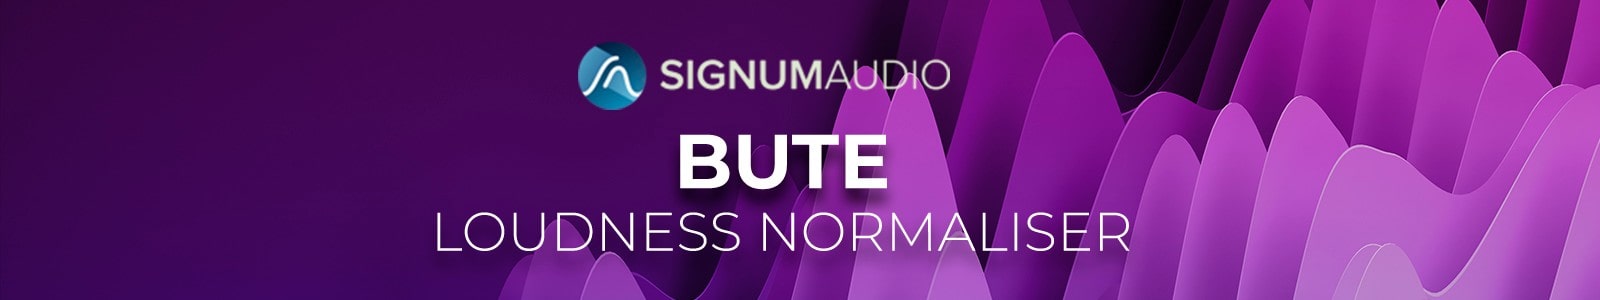 Signum Audio BUTE Loudness Normaliser